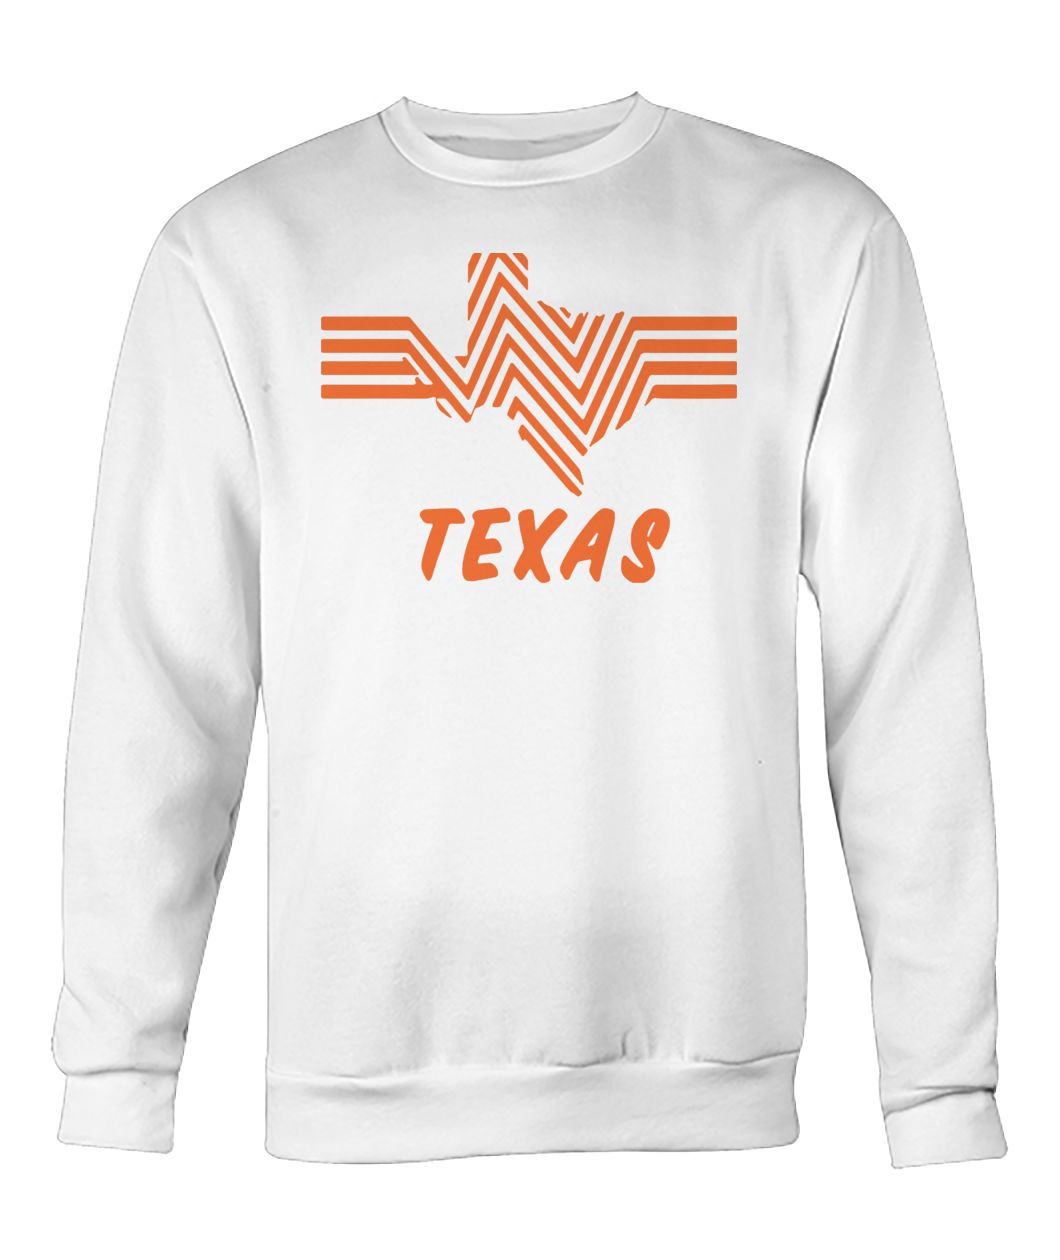 Whataburger Texas crew neck sweatshirt